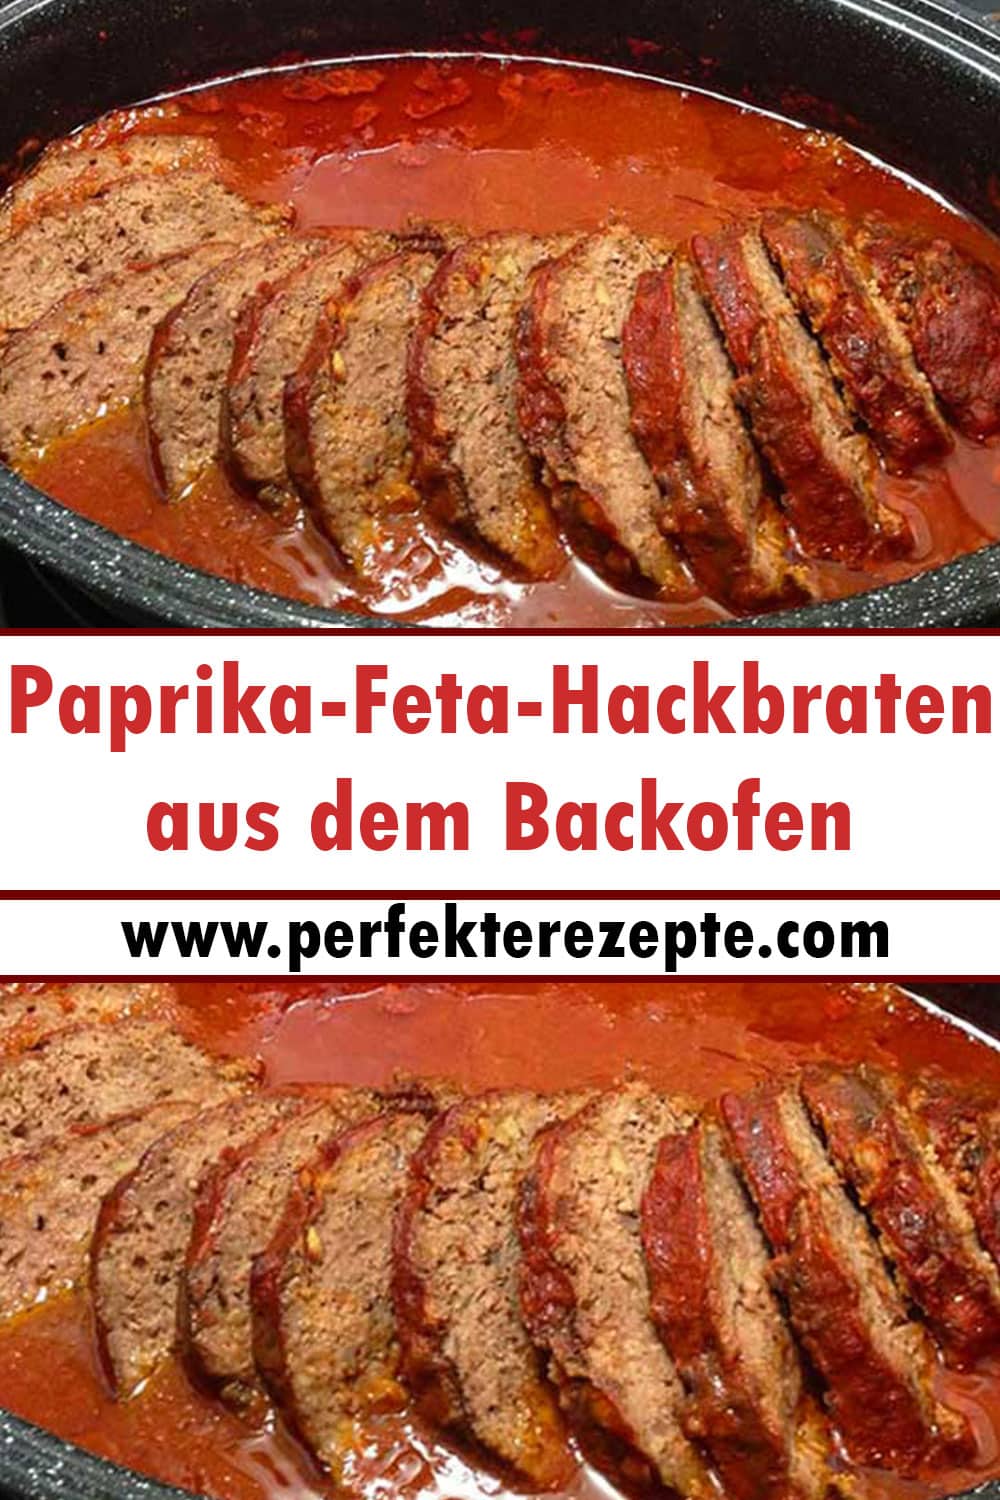 Paprika-Feta-Hackbraten aus dem Backofen mit Tomatensauce Rezept